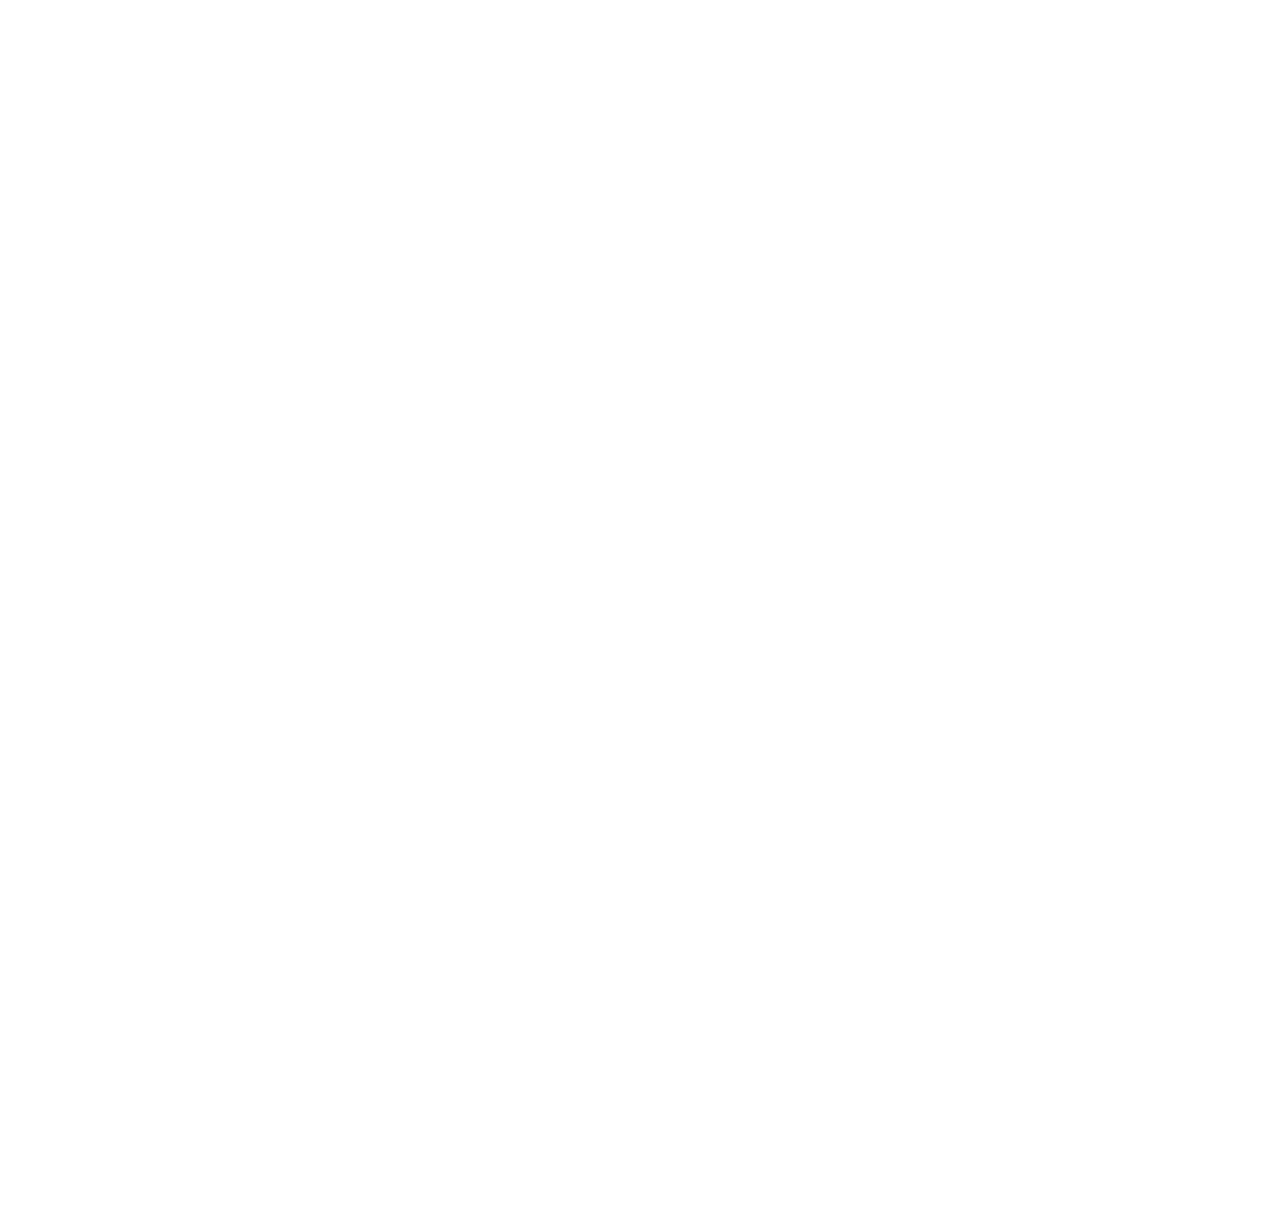 Gildan 18500 pullover hoodie s front mask